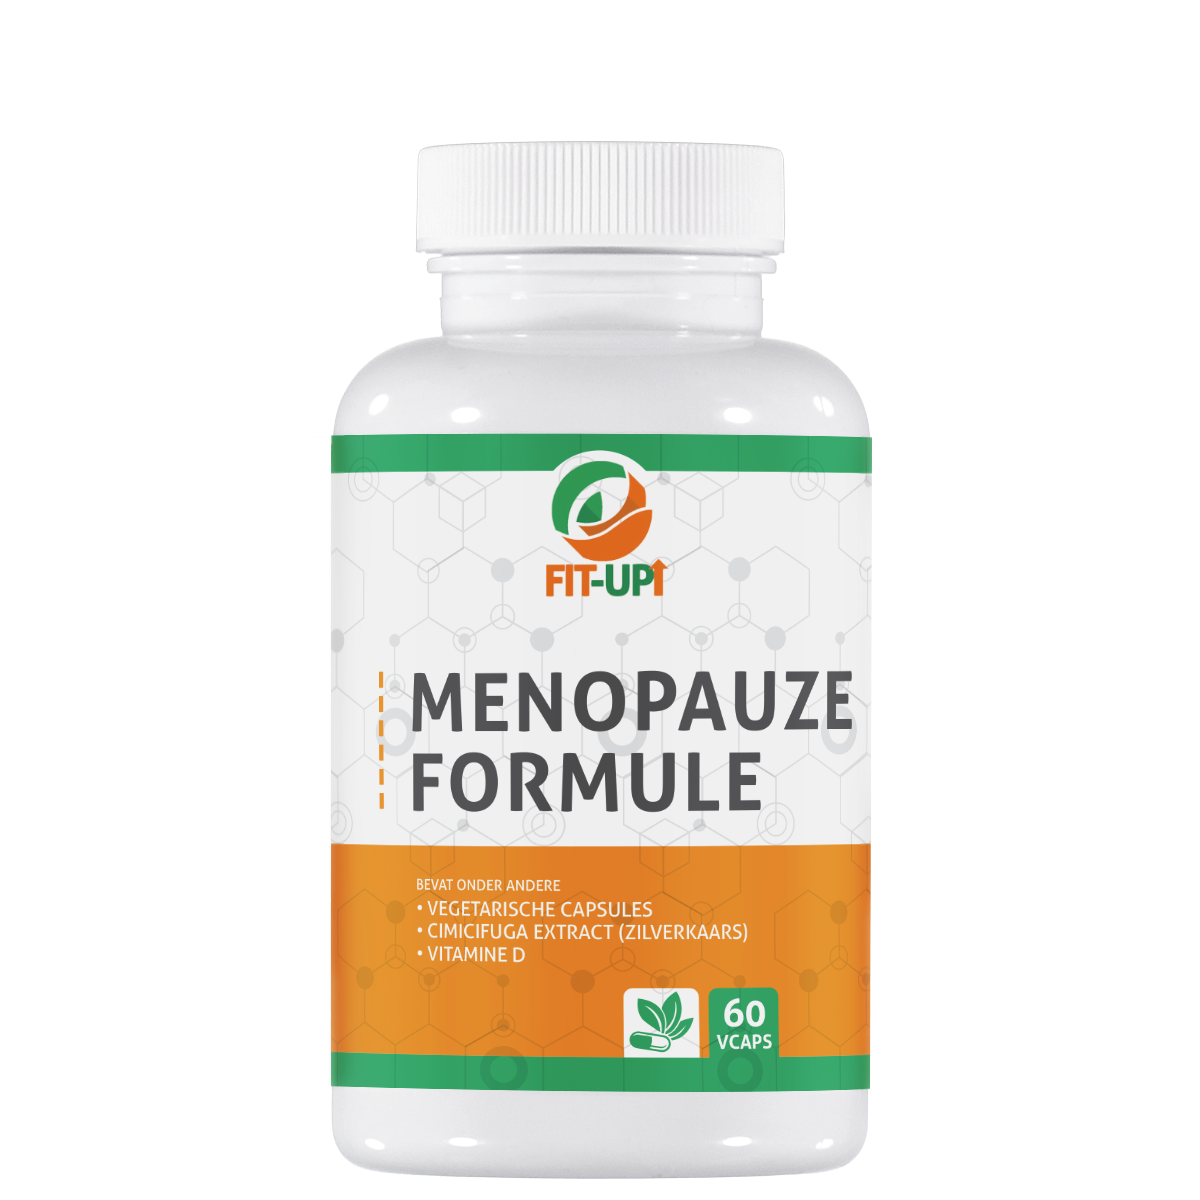 Menopauze formule | 60 caps